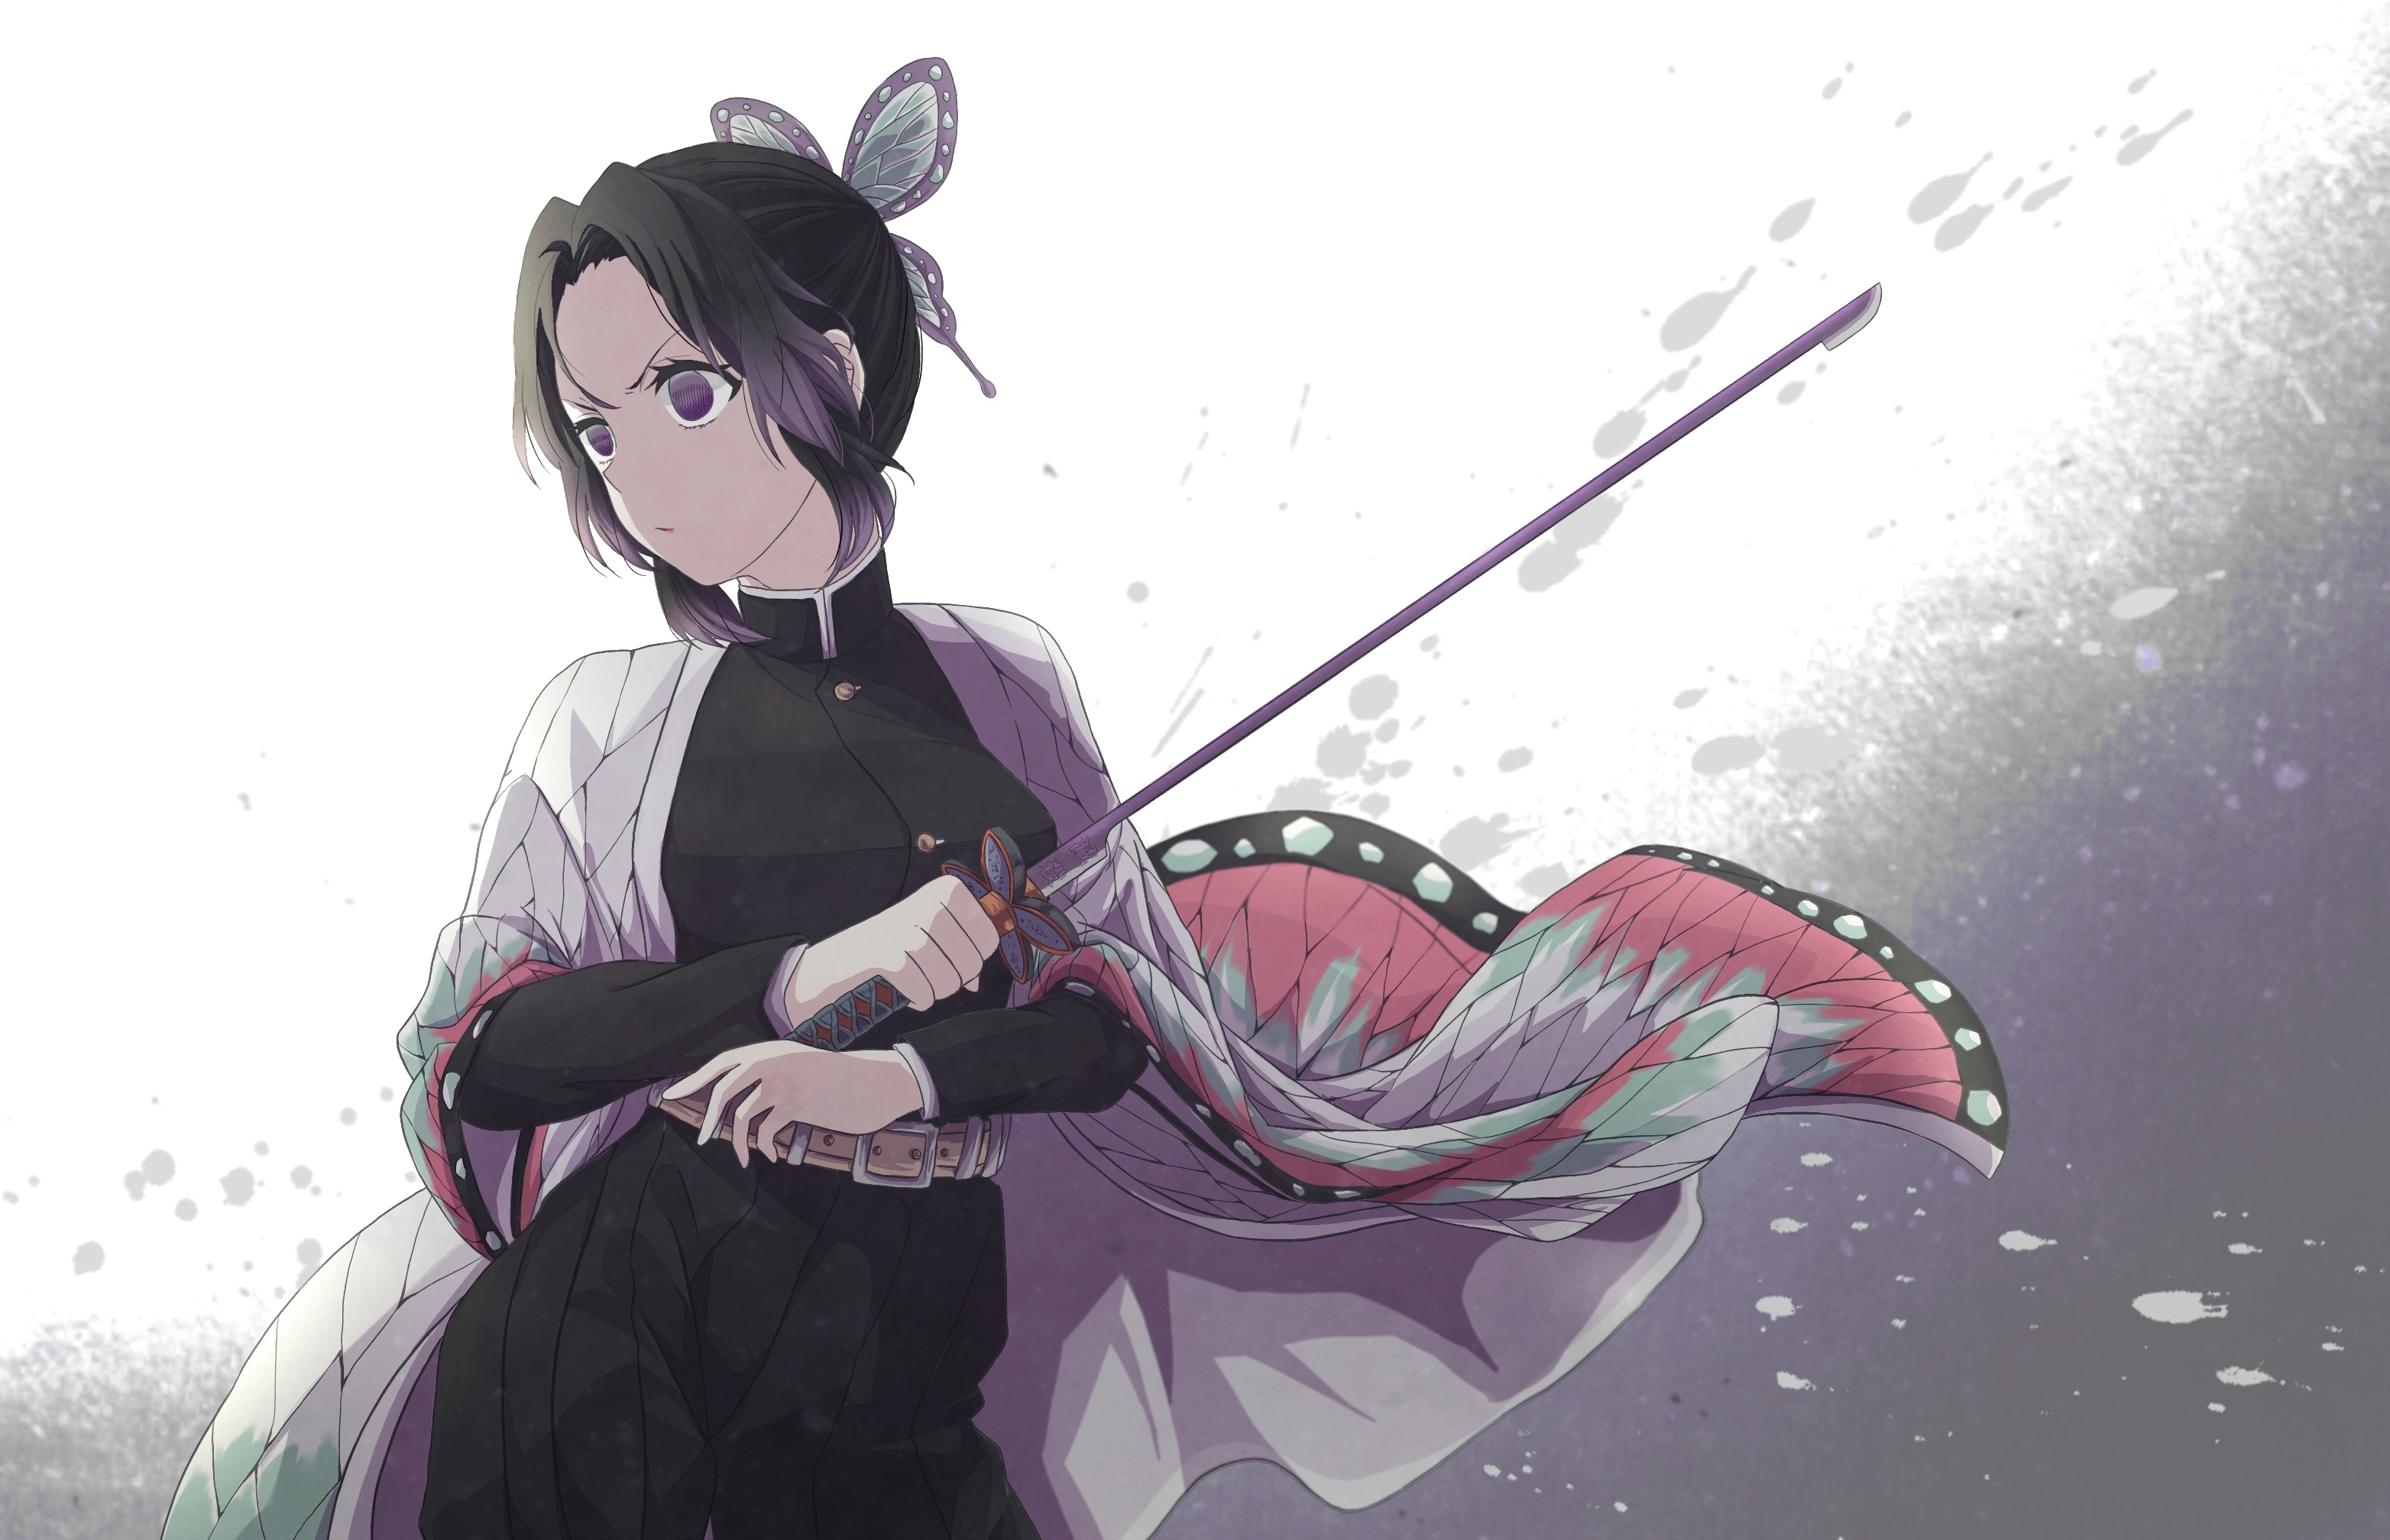 Demon Slayer Butterfly Girl Shinobu Kochou With Background Of Bright Moon  HD Anime Wallpapers  HD Wallpapers  ID 40885